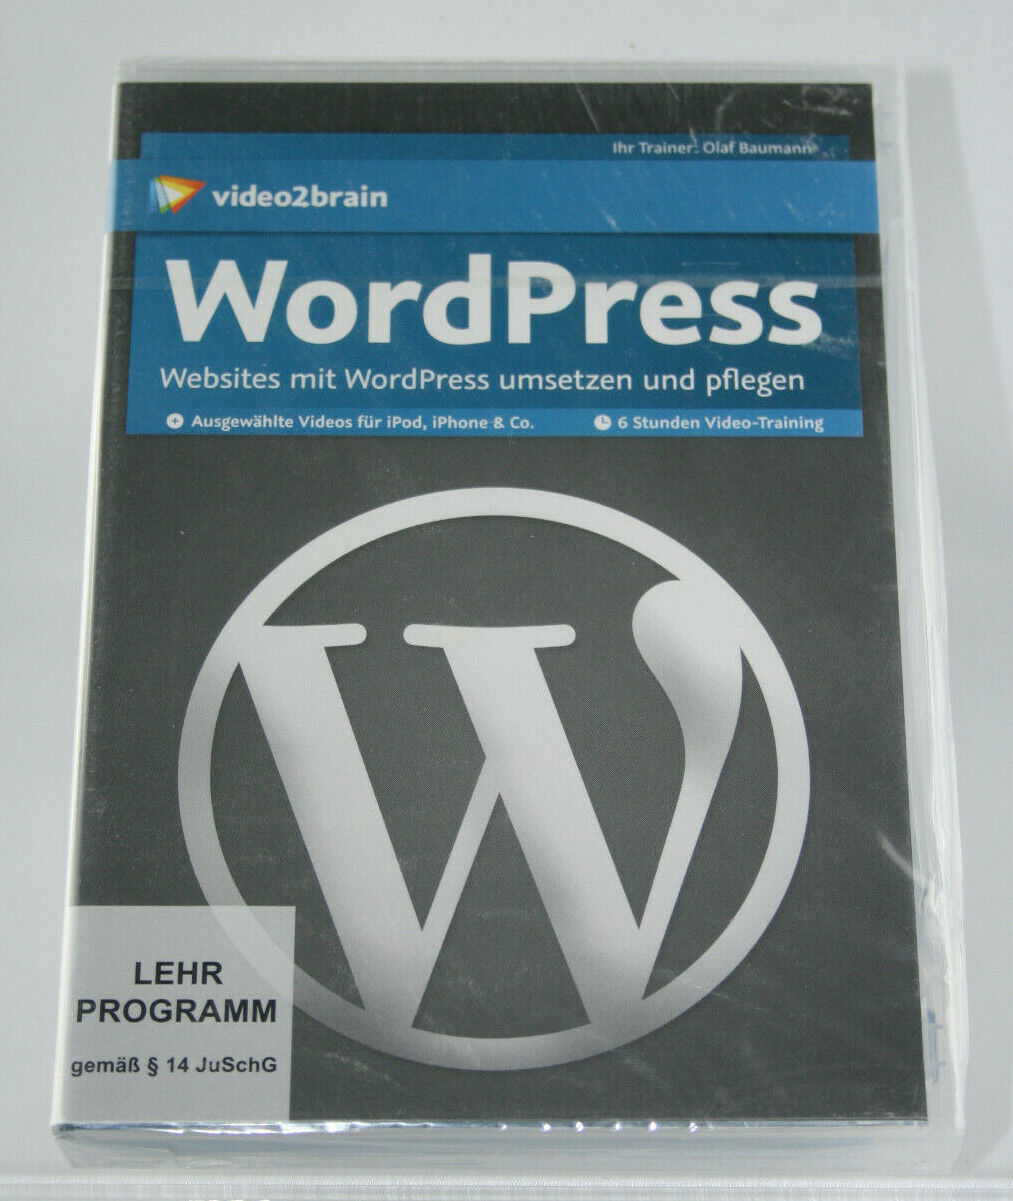 WordPress | Softwareentwicklung | DVD Video-Training | video2brain | NEU in OVP